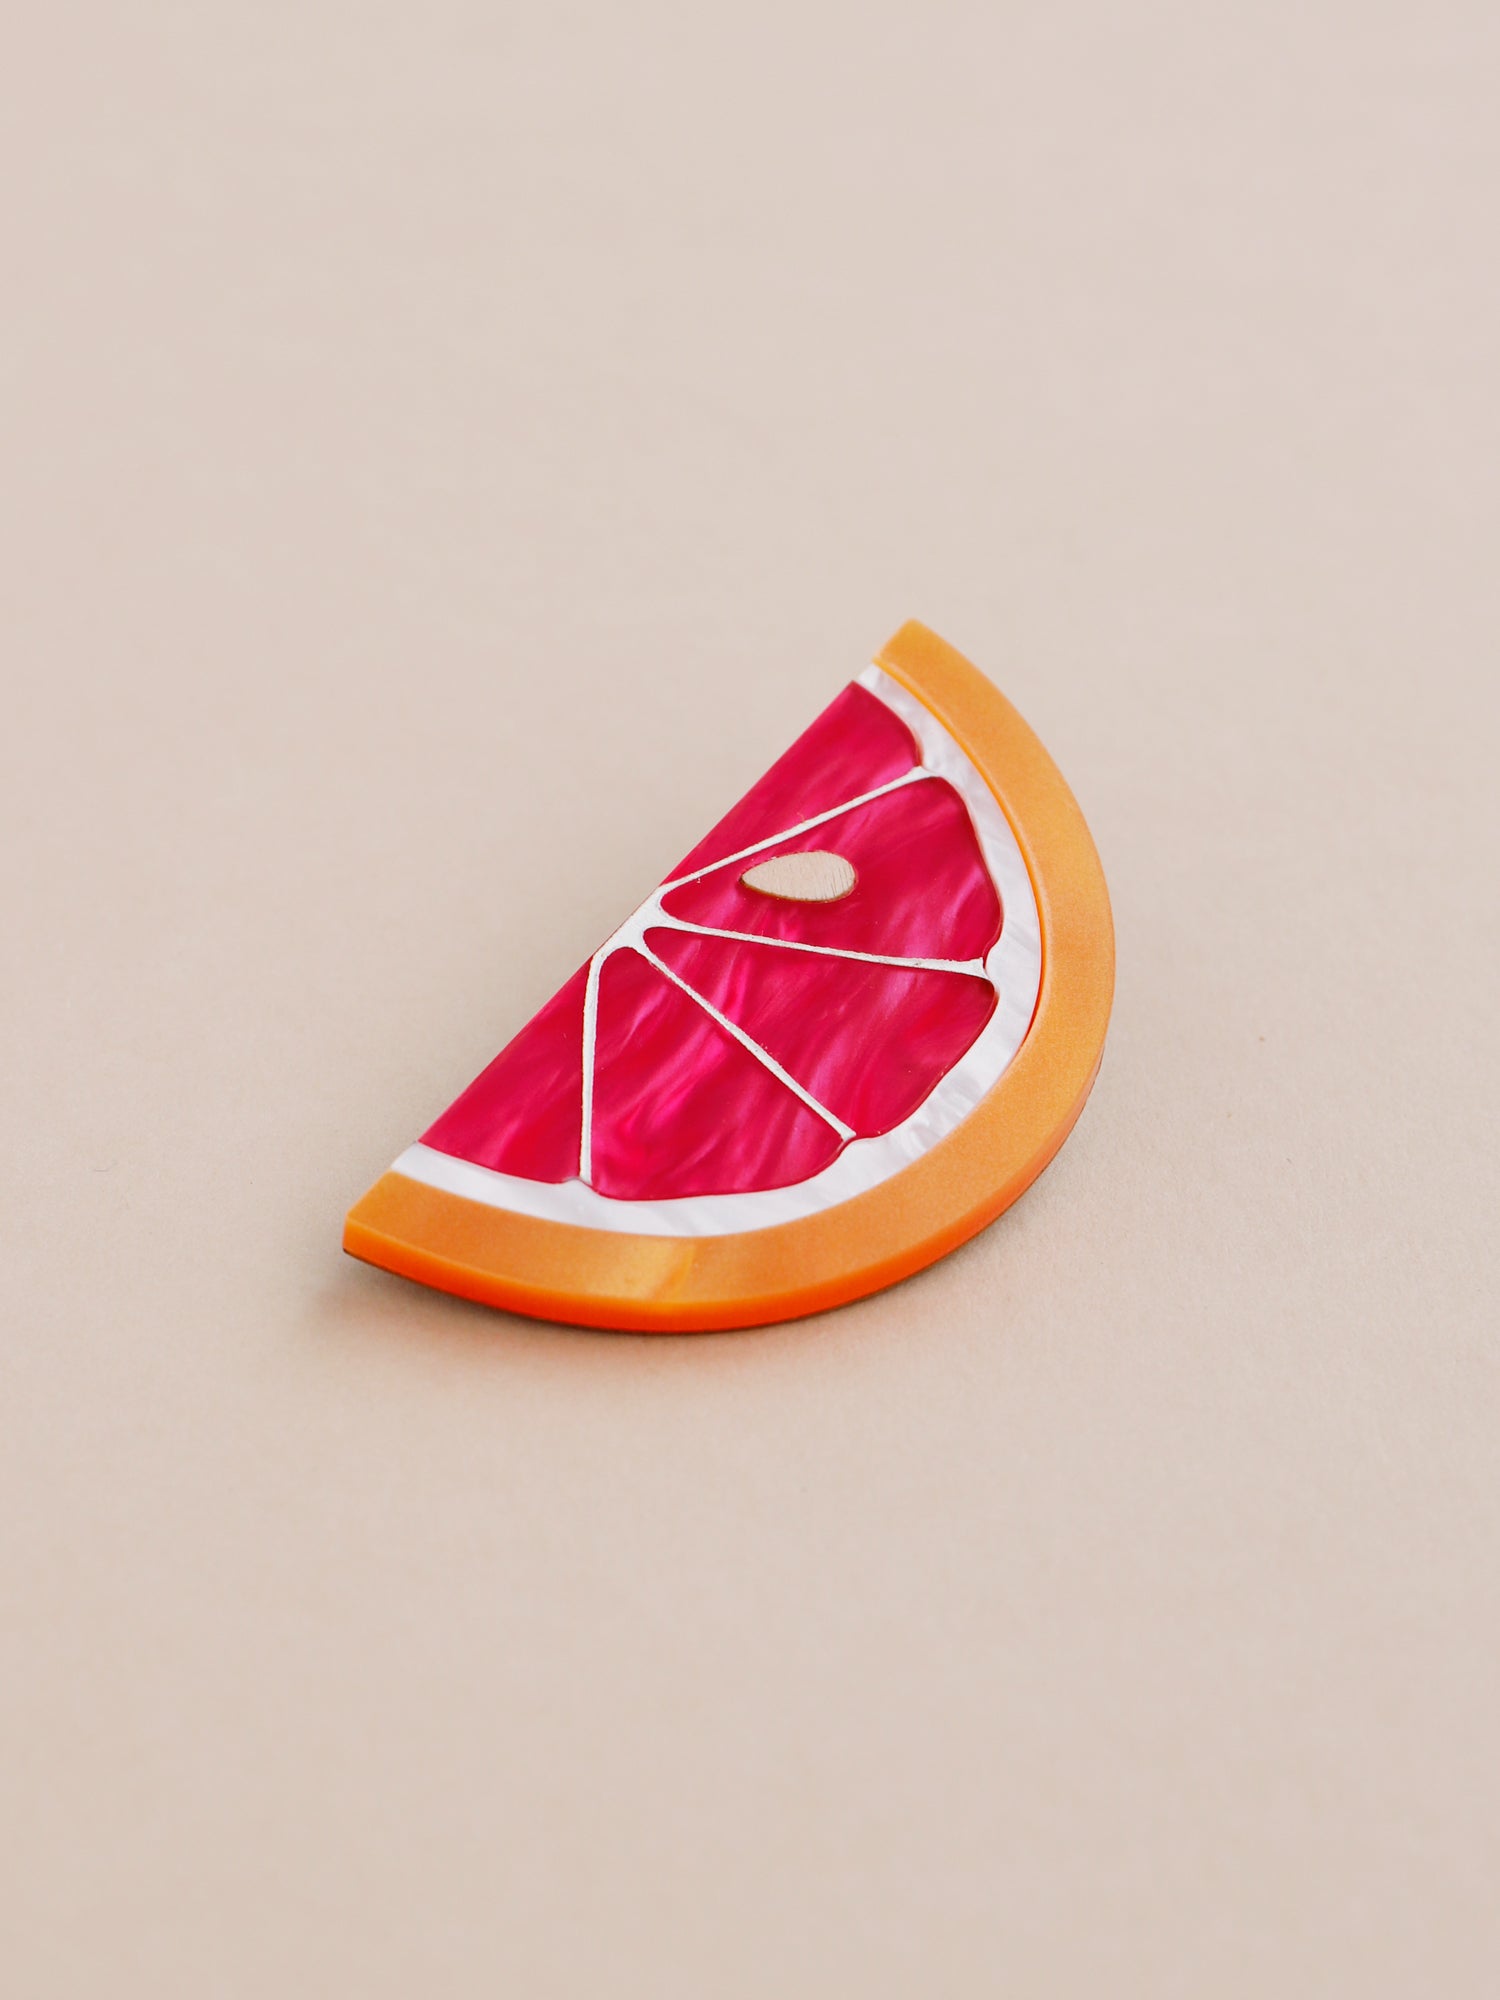 Grapefruit Slice Hair Clip